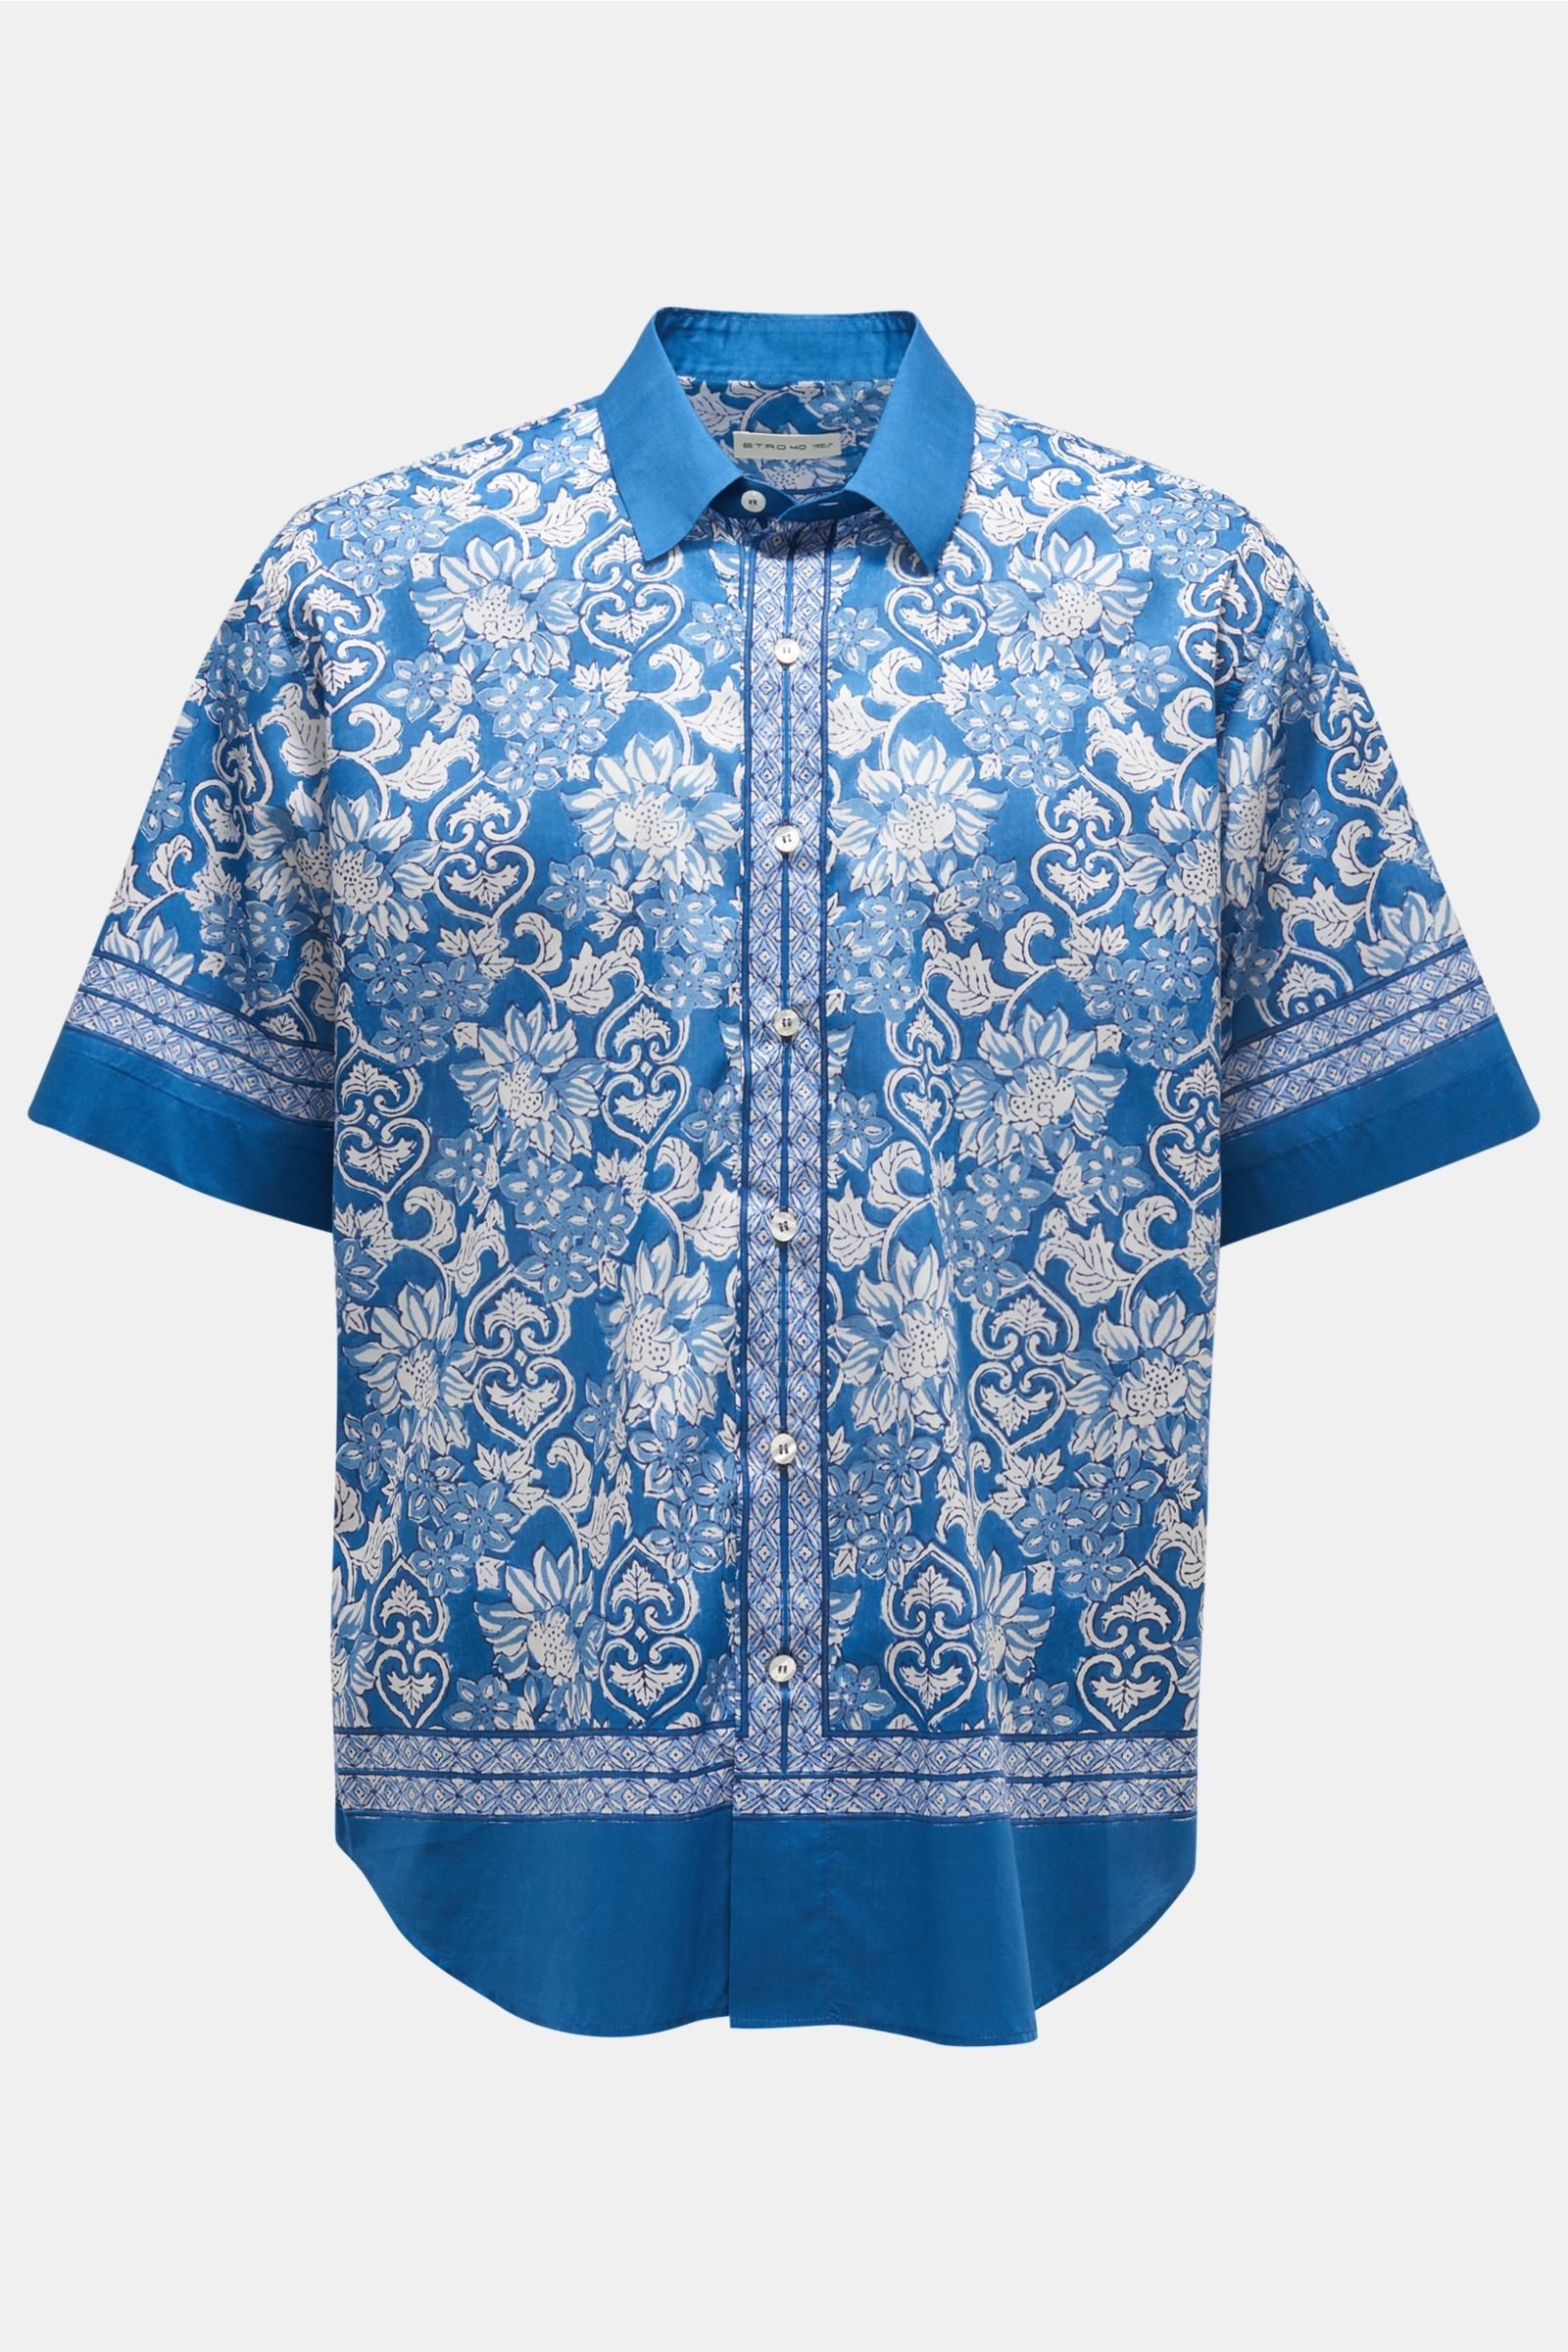 Short-sleeve shirt Kent collar grey-blue patterned